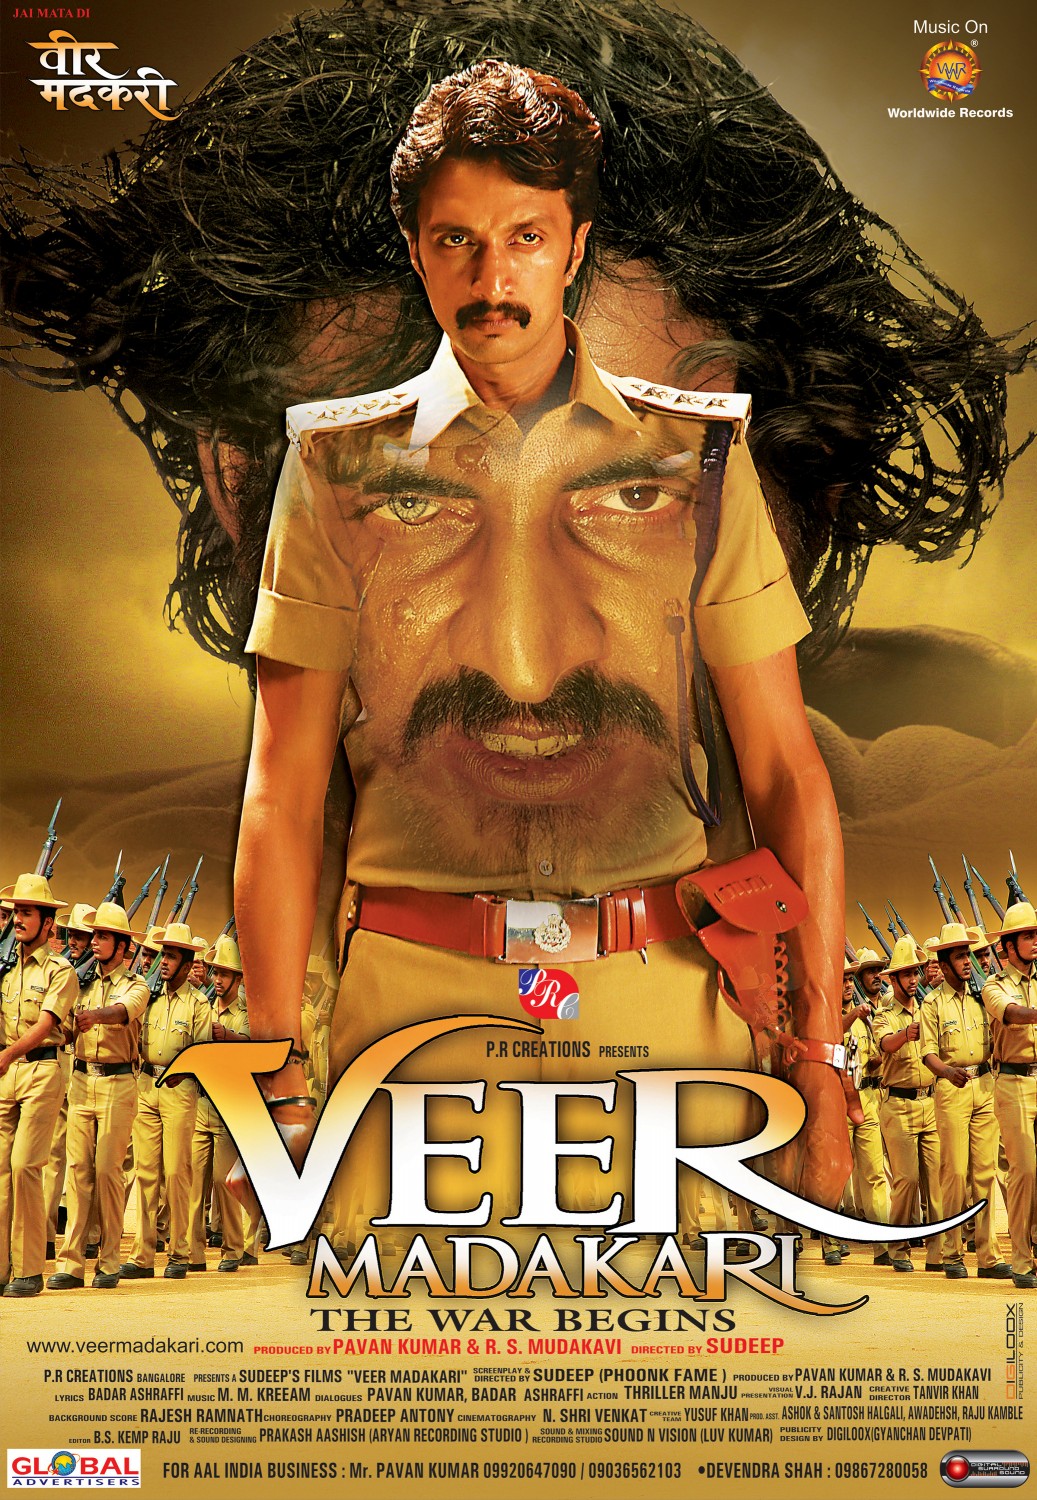 Extra Large Movie Poster Image for Veera Madakari 